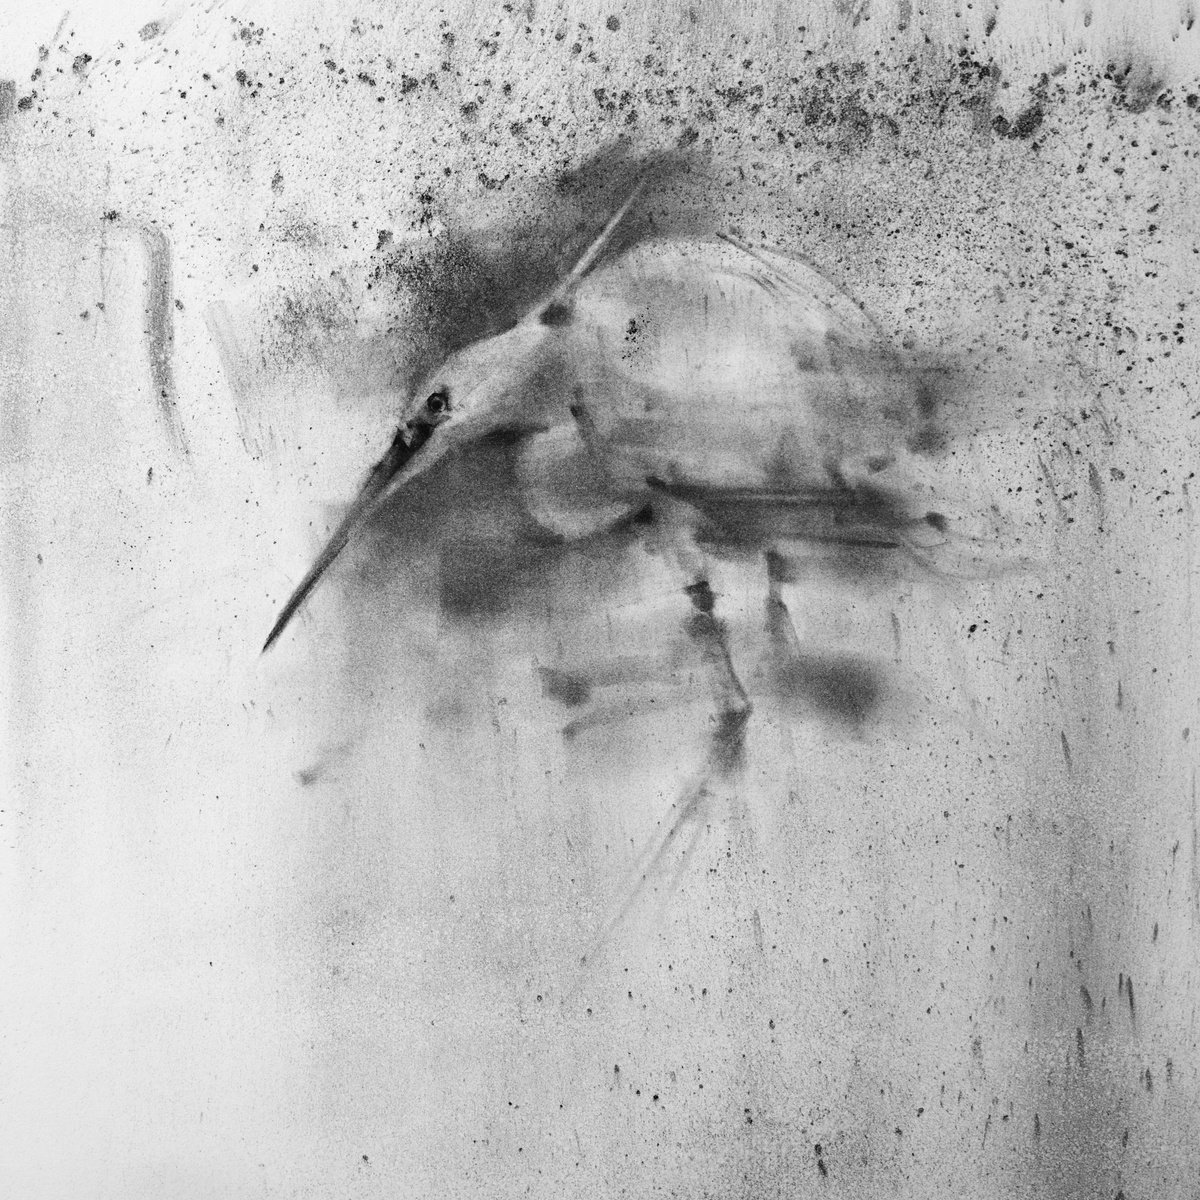 Little egret by Tianyin Wang